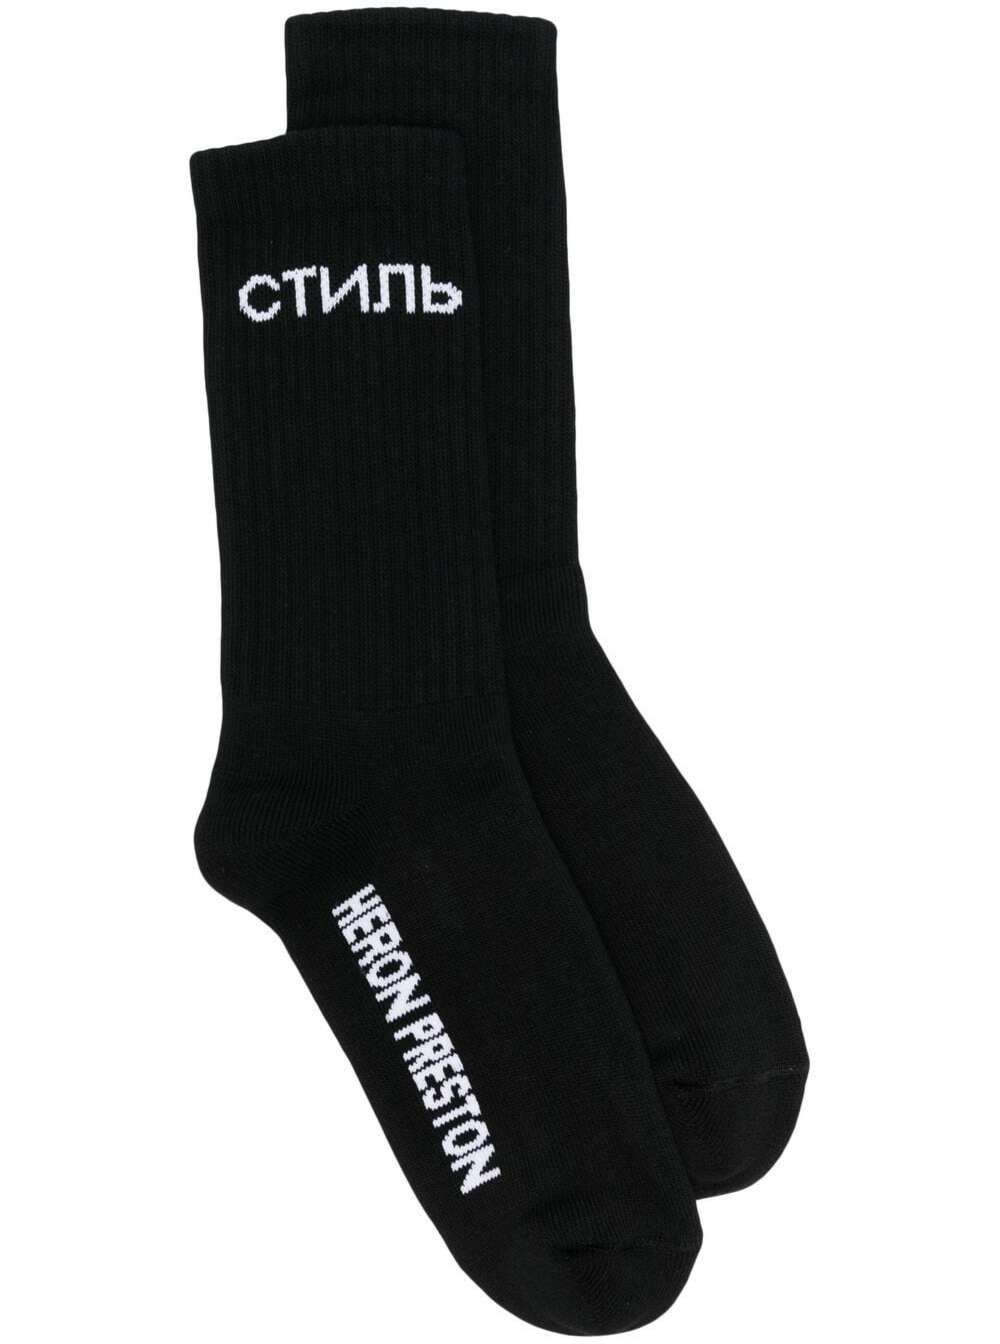 HERON PRESTON Ctnmb Long Socks Black White